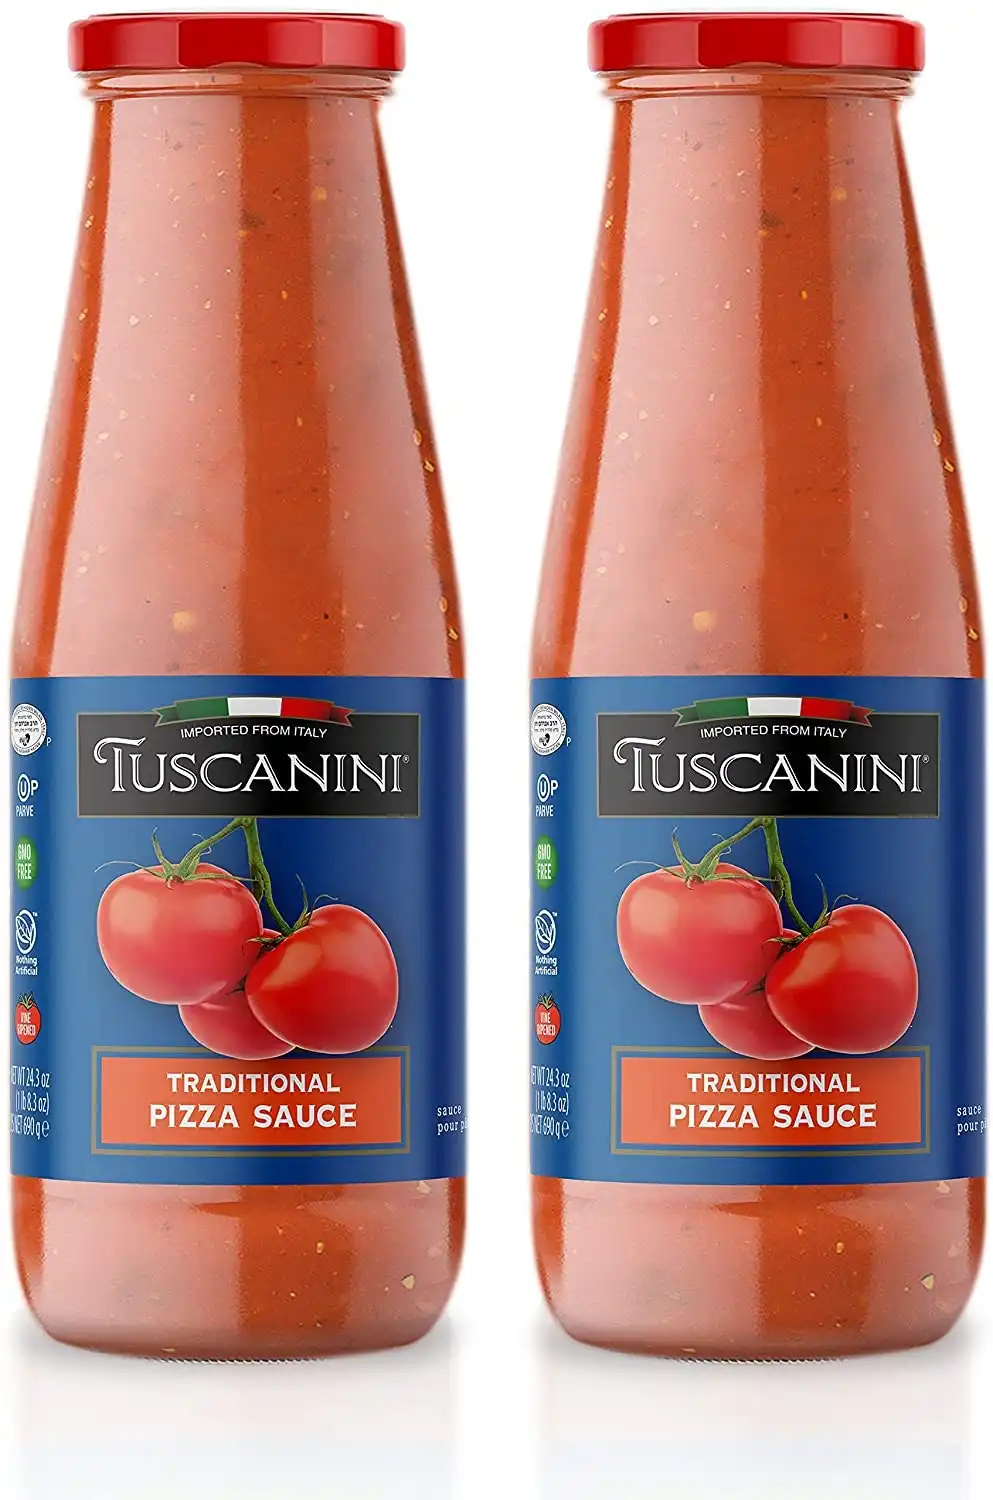 Tuscanini Traditional Italian Pizza Sauce 690g x 2